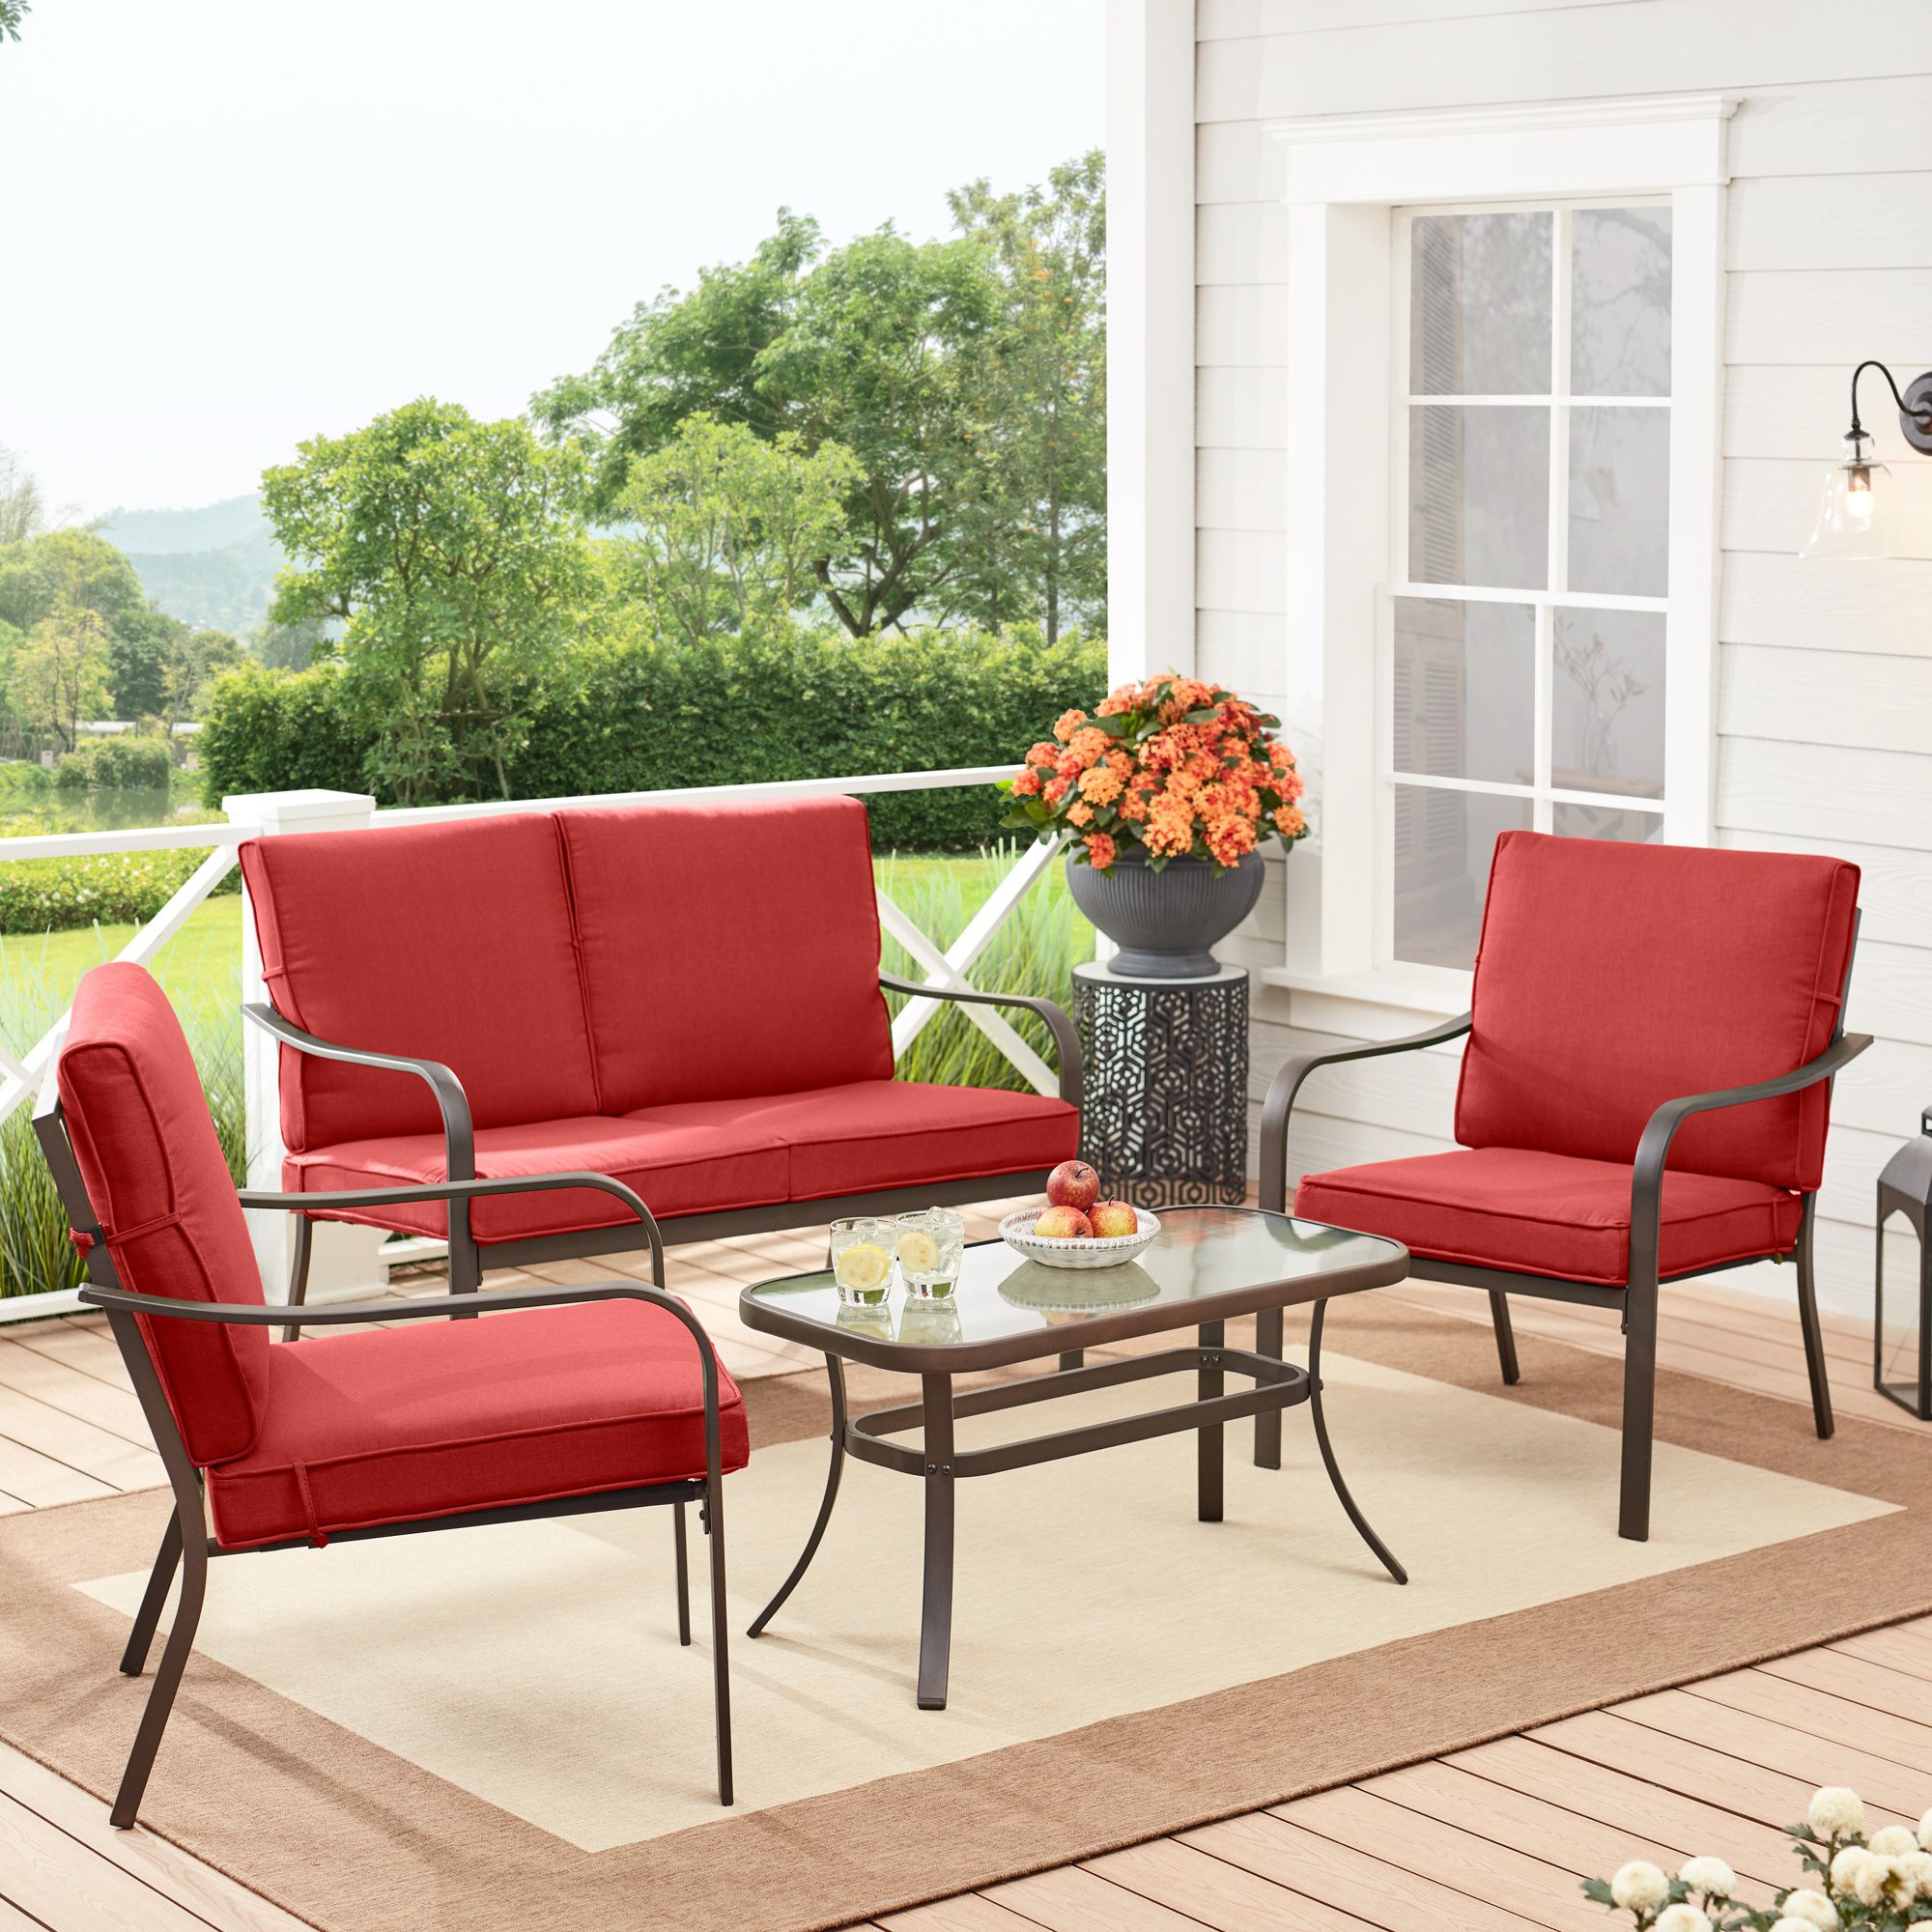 Preferred 4 Piece Gray Outdoor Patio Seating Sets With Regard To Mainstays Stanton 4 Piece Outdoor Patio Conversation Set, Red – Walmart (View 8 of 15)